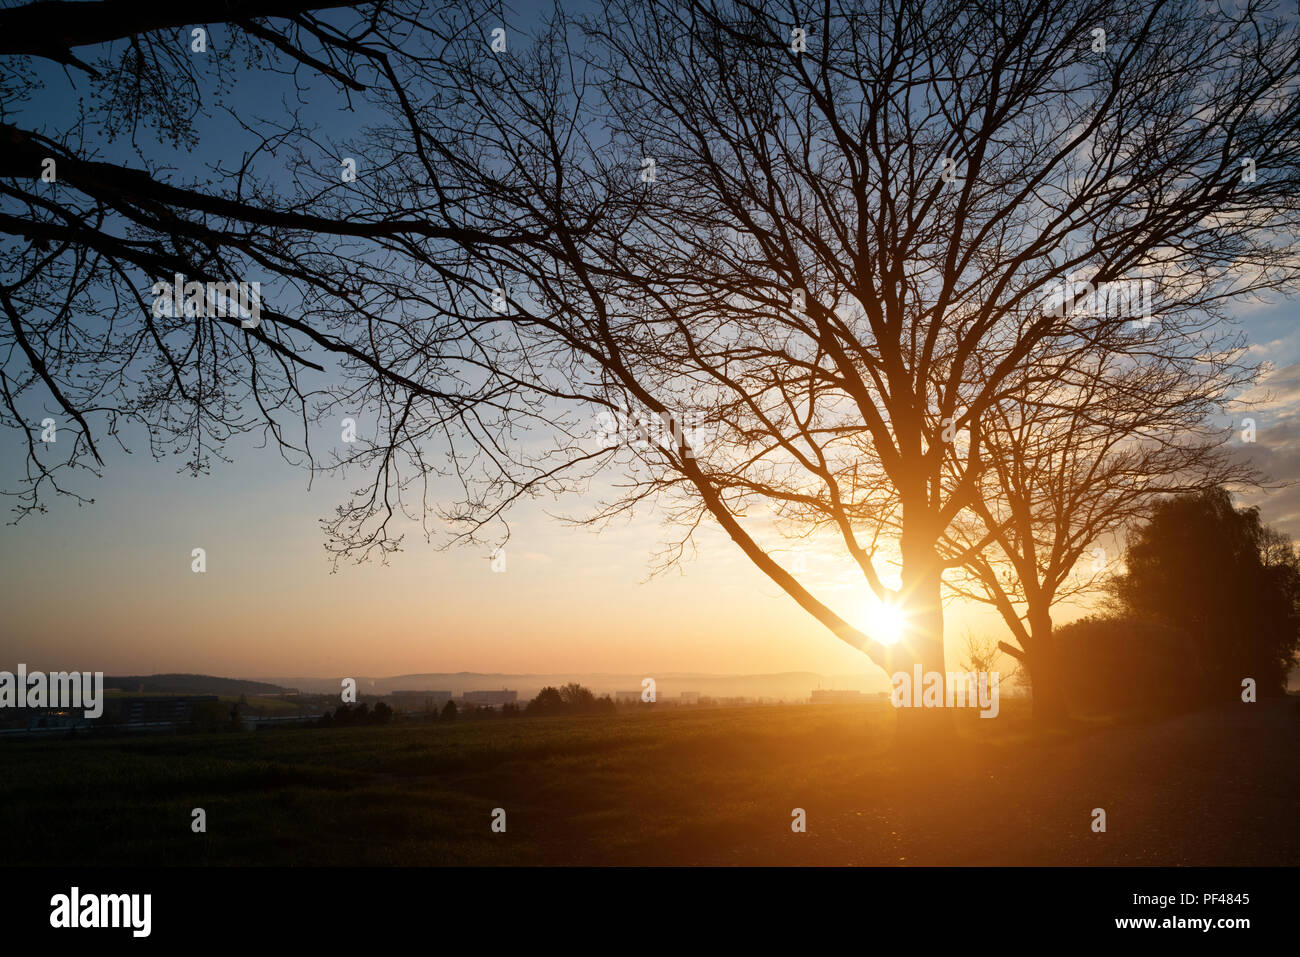 Beautiful Morning, tree silhouette on open field at sunset Stock Photo